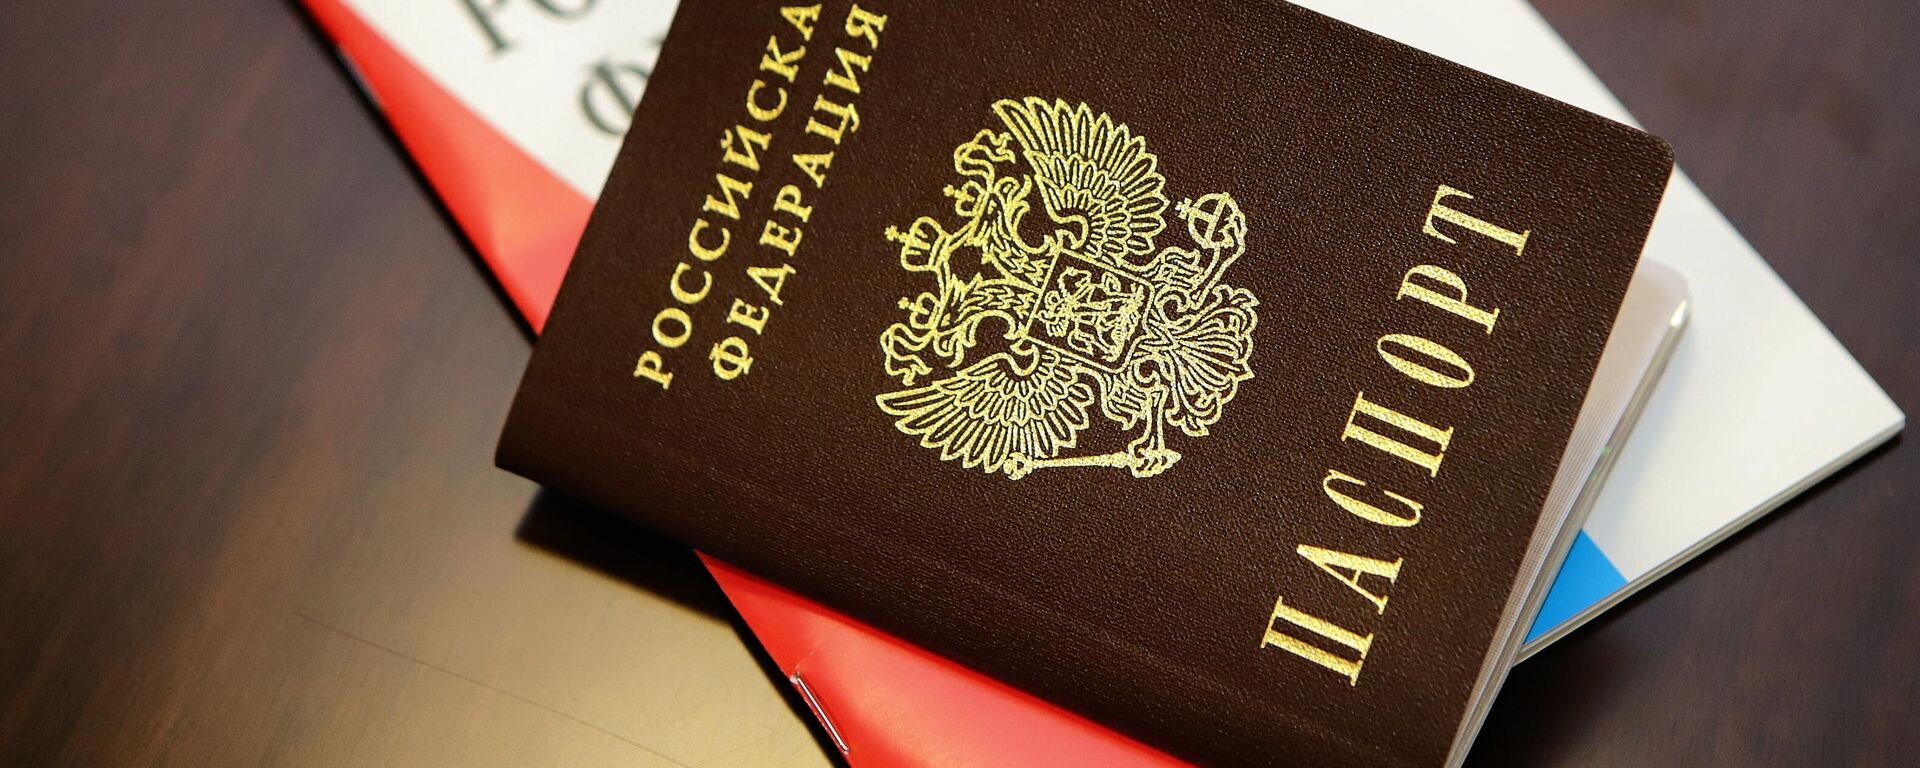 Un pasaporte ruso - Sputnik Mundo, 1920, 31.08.2022